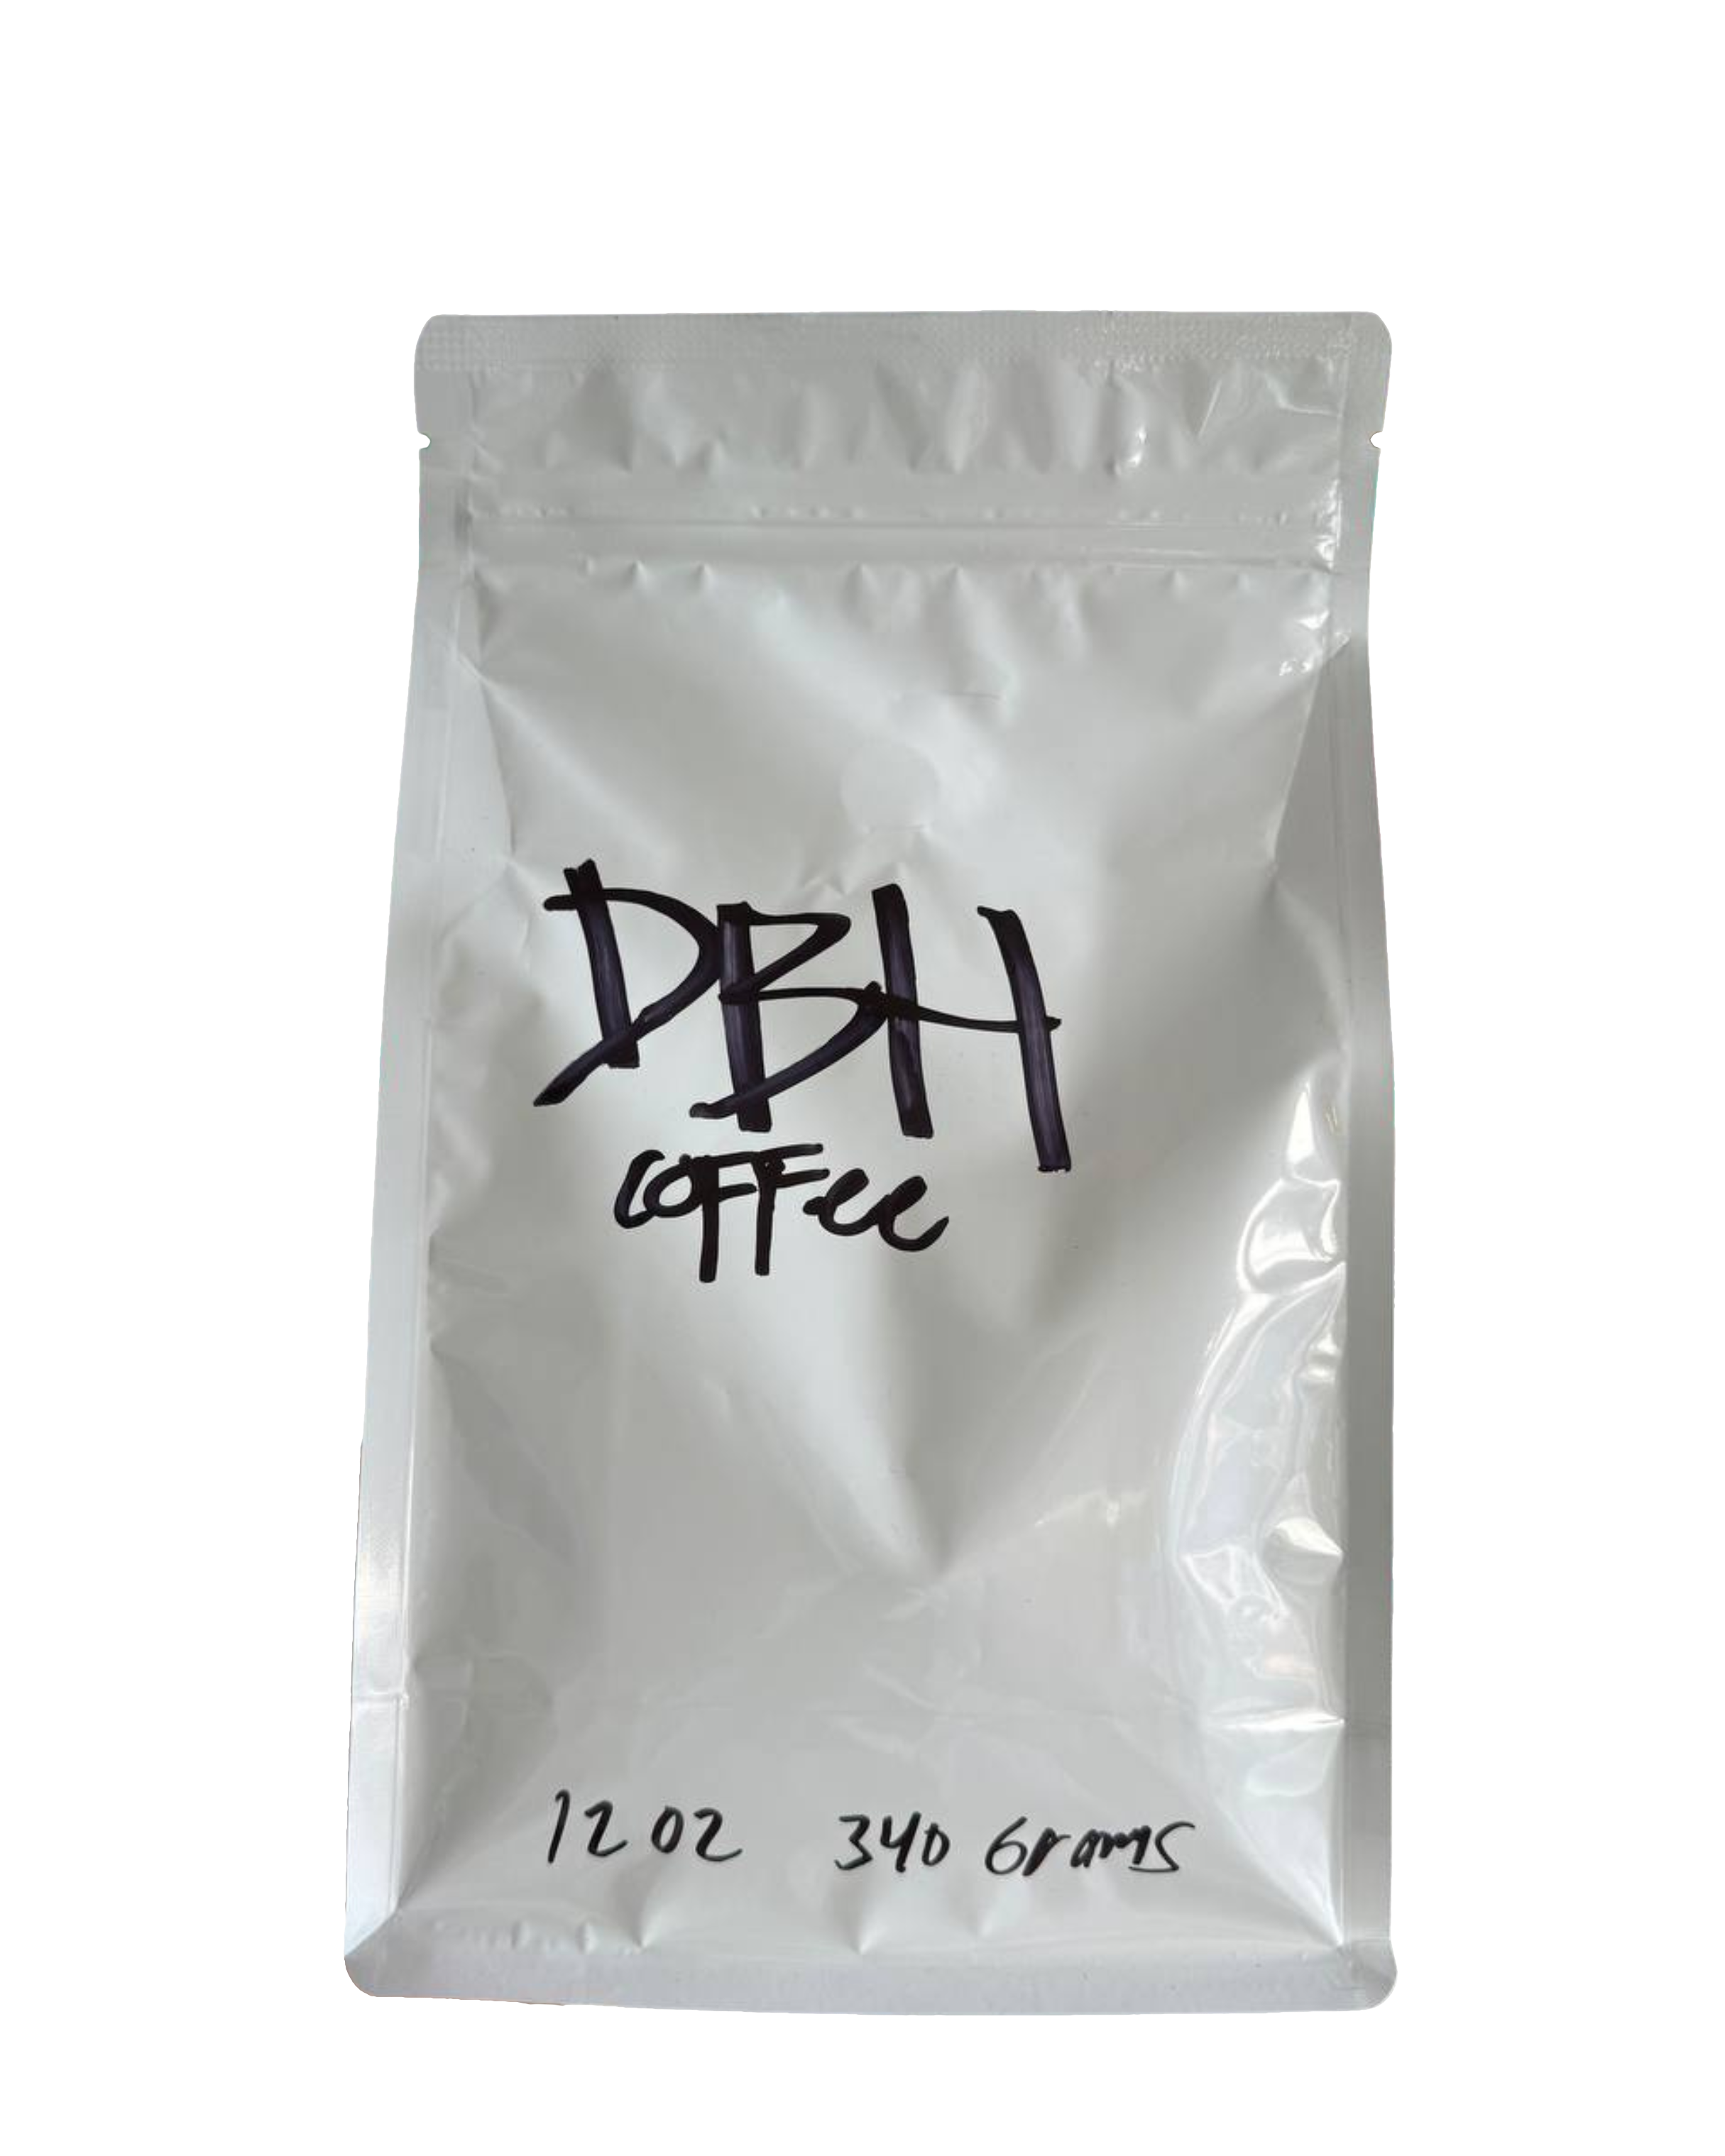 DBH Coffee by Davidsbeenhere